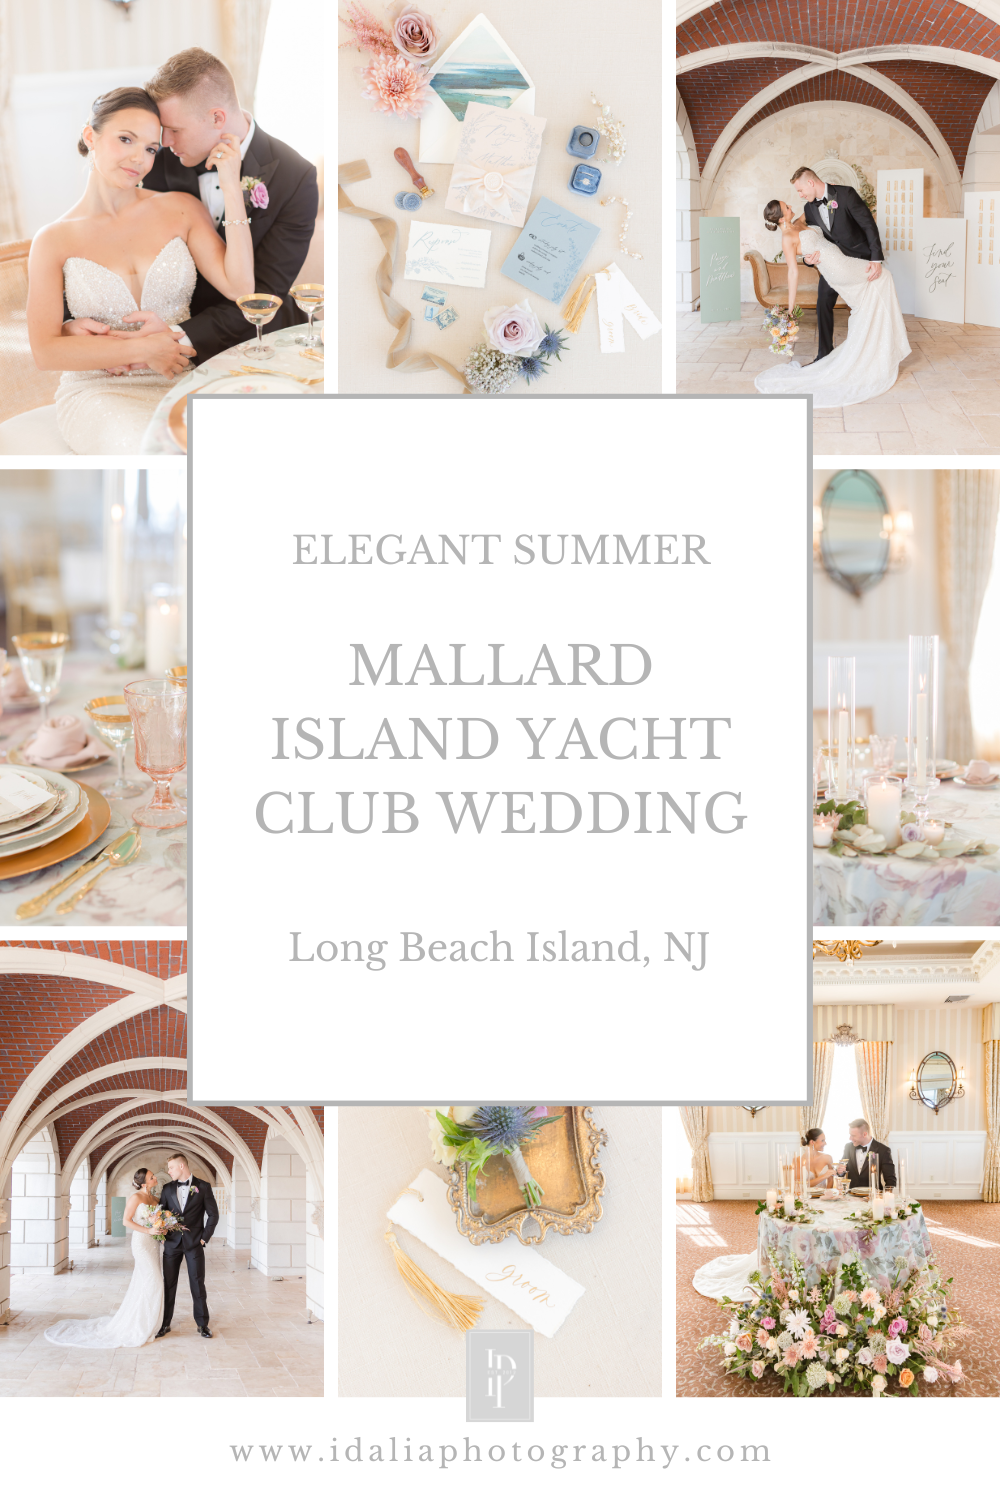 Mallard Island Yacht Club Wedding feature published in Bay Magazine photographed by Idalia Photography, LBI wedding photographer